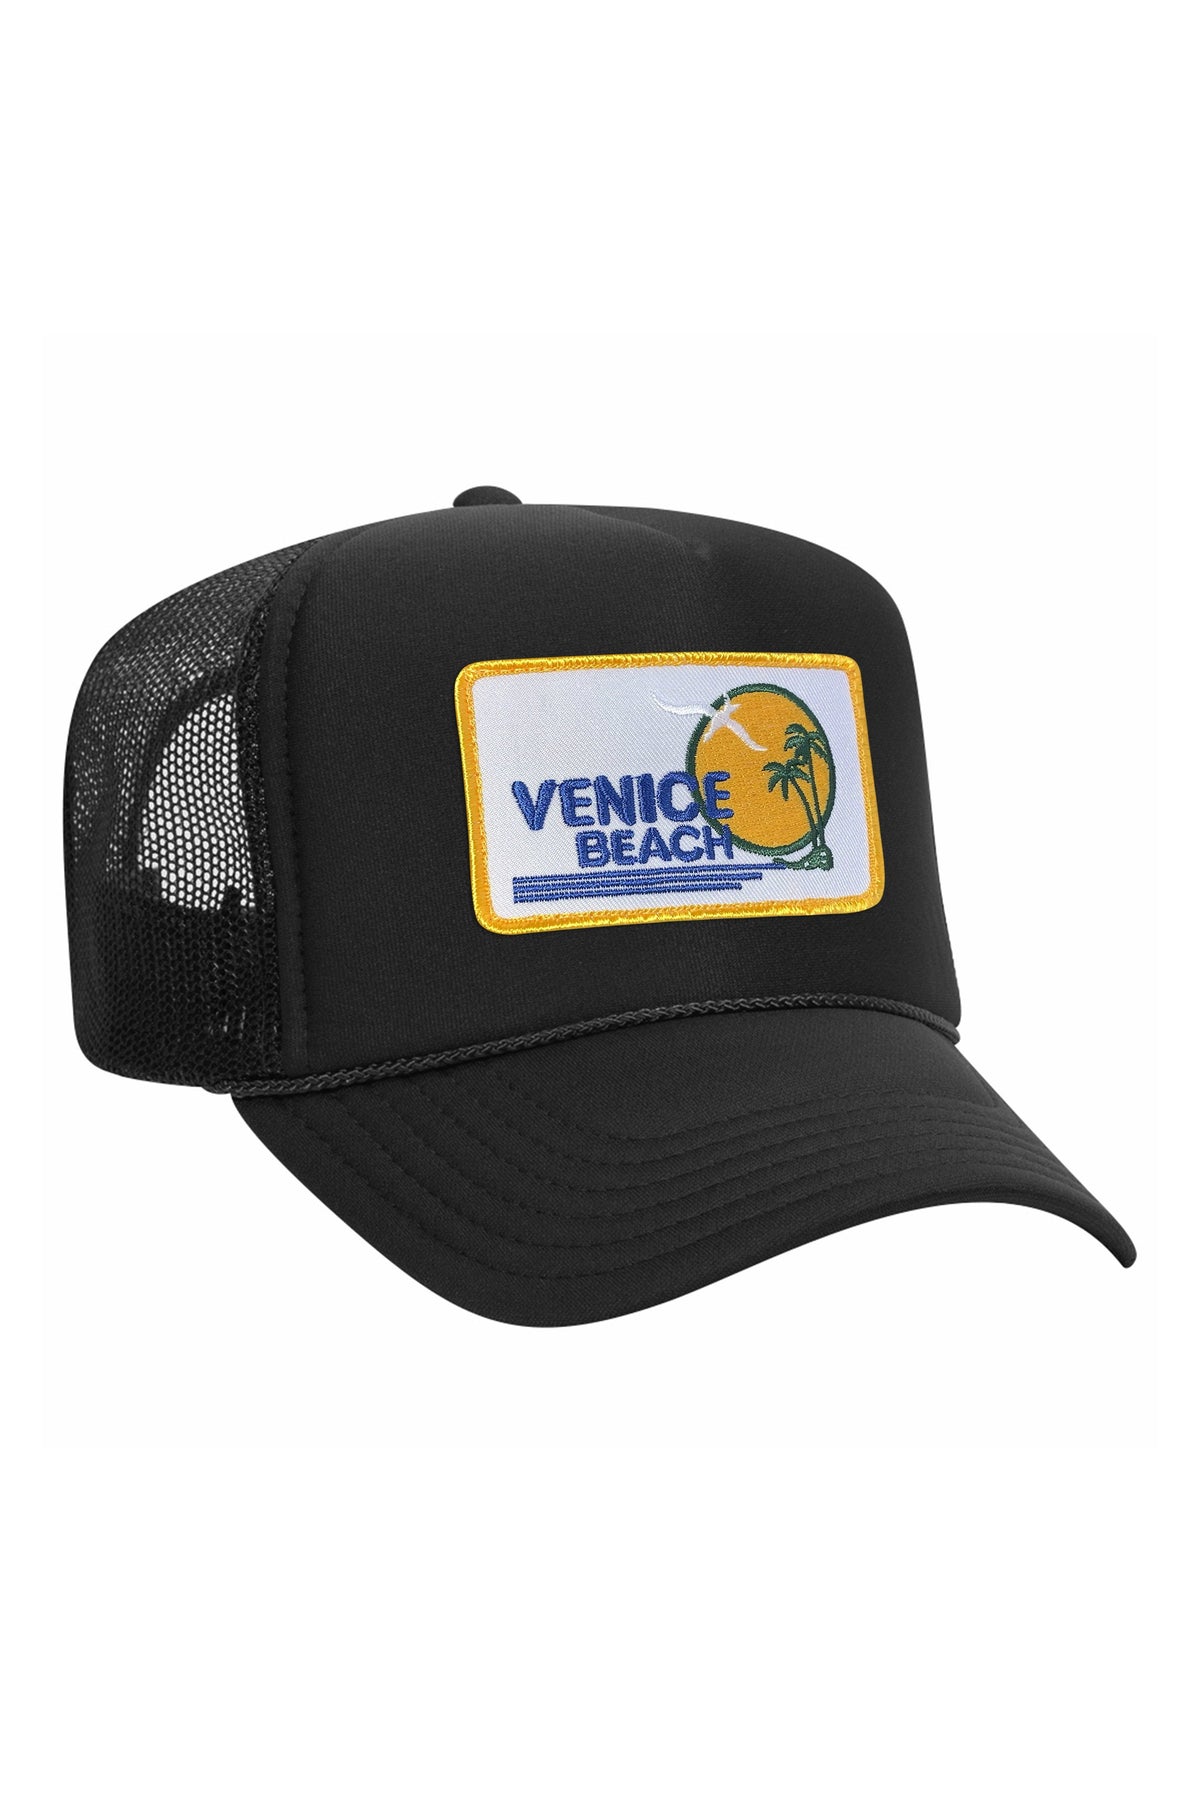 VENICE BEACH VINTAGE TRUCKER HAT HATS Aviator Nation OS BLACK 